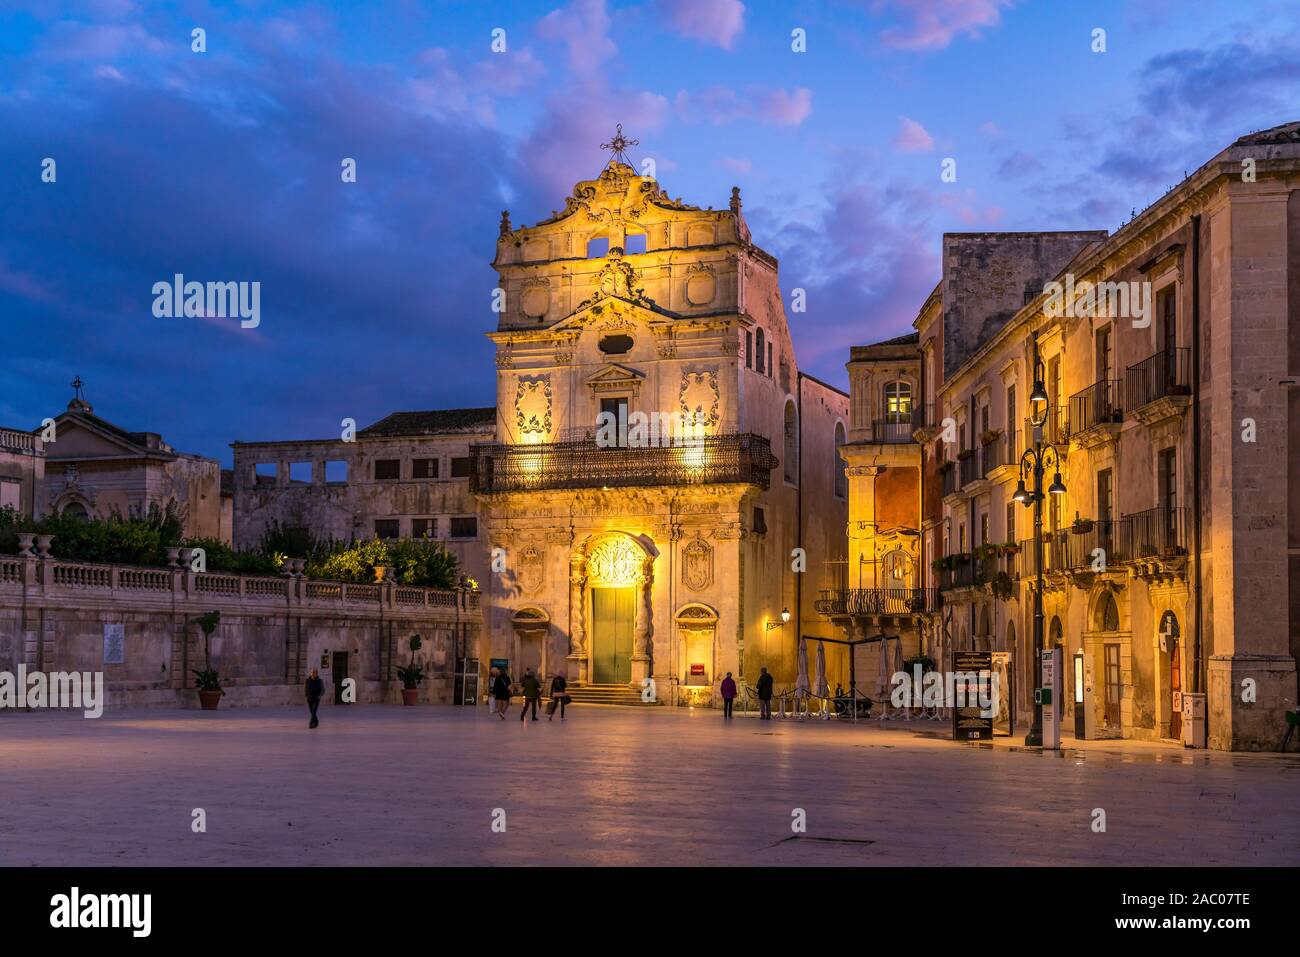 Barockkirche Santa Lucia alla Badia auf dem Domplatz Piazza Duomo in der Abenddämmerung, Insel Ortygia, Syrakus, Sizilien, Italien, Europa  |  baroque Stock Photo